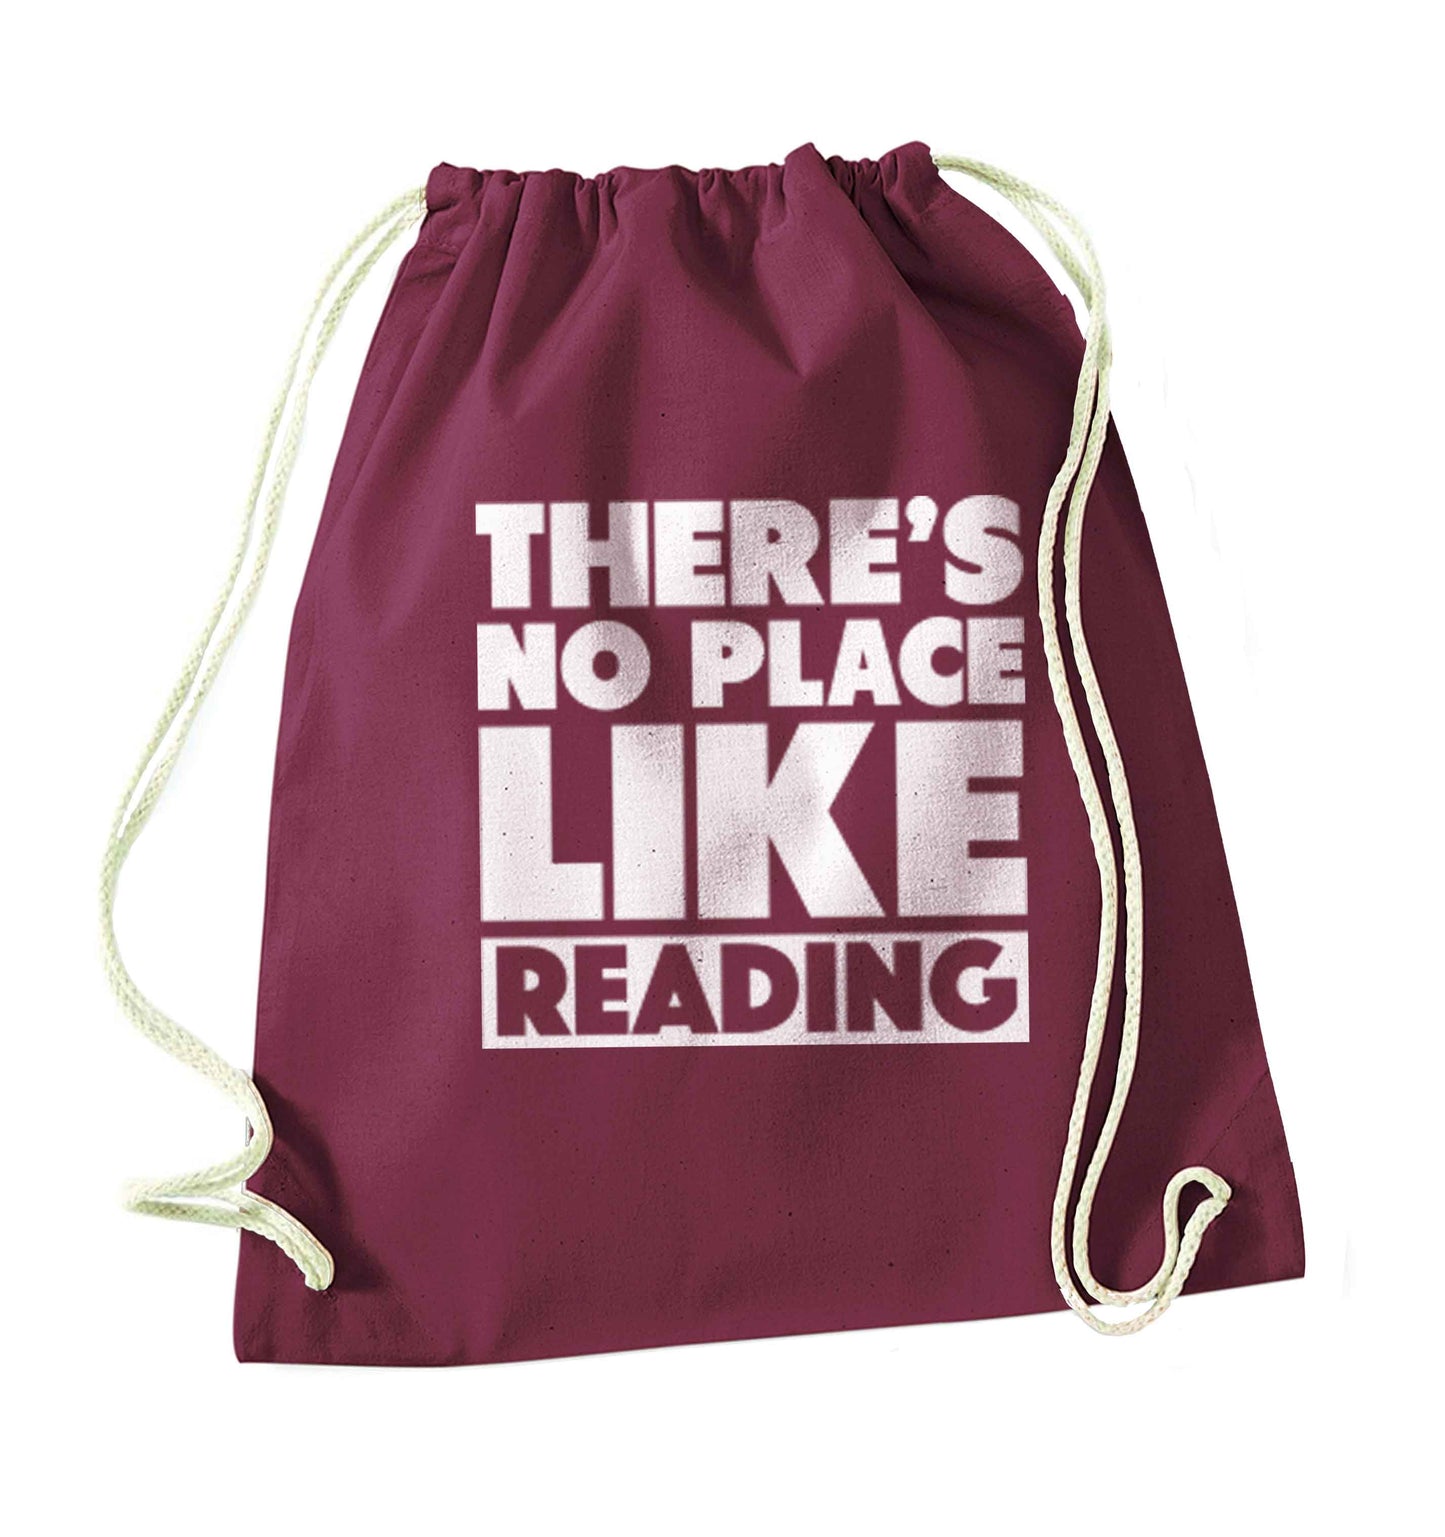 There's no place like Readingmaroon drawstring bag